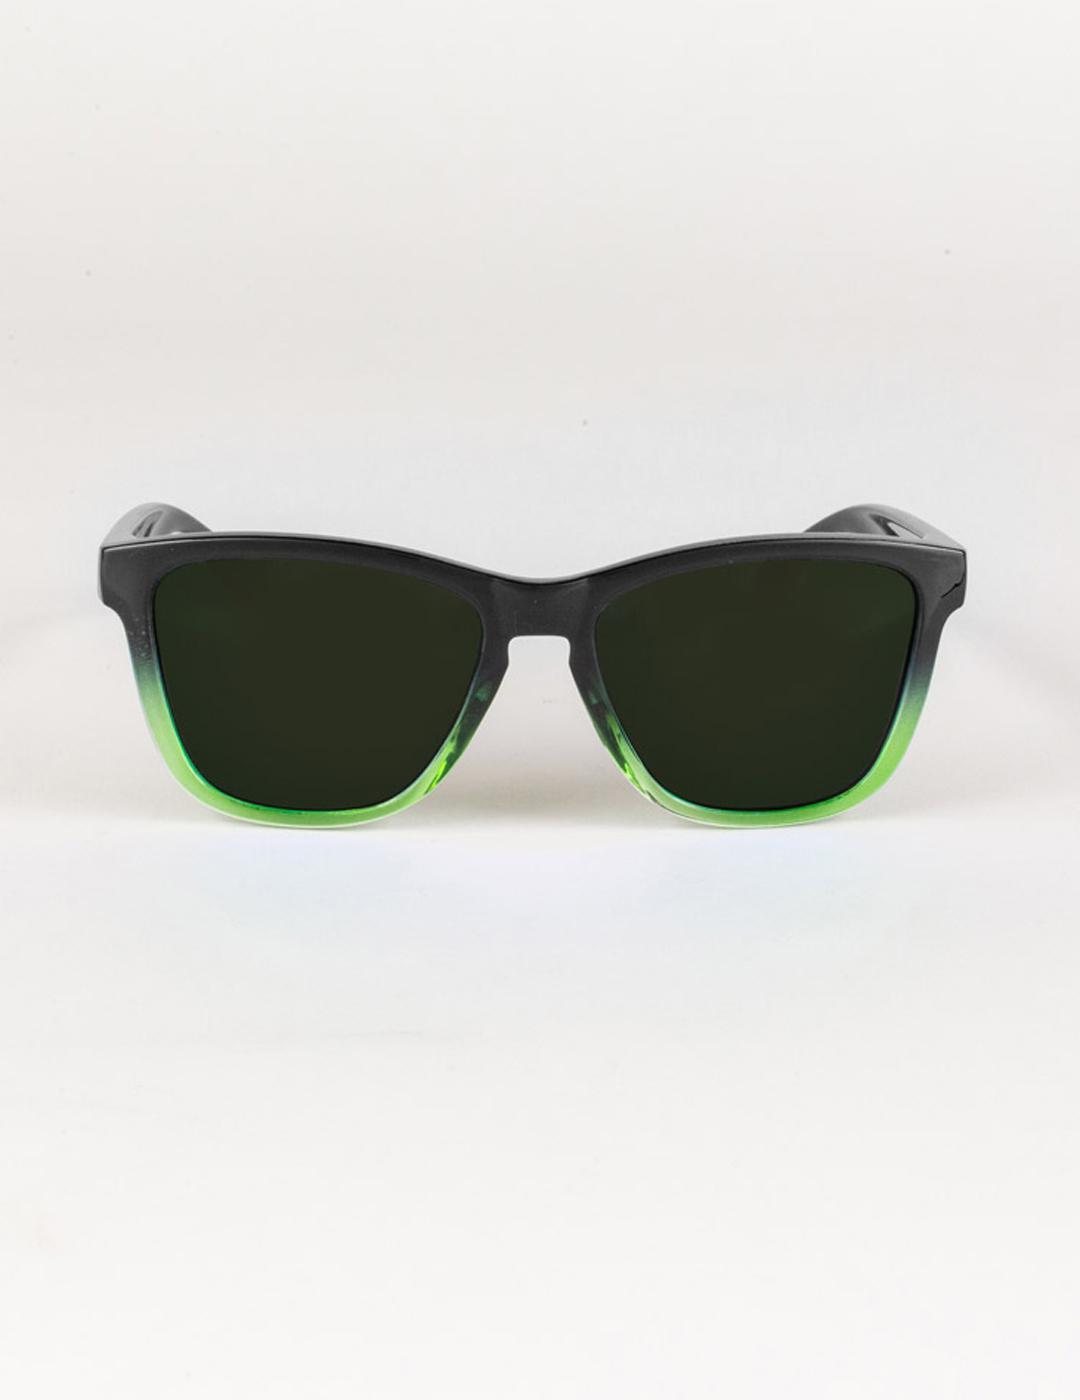 Gafas HYDROPONIC EW STONER Black to Green + Green